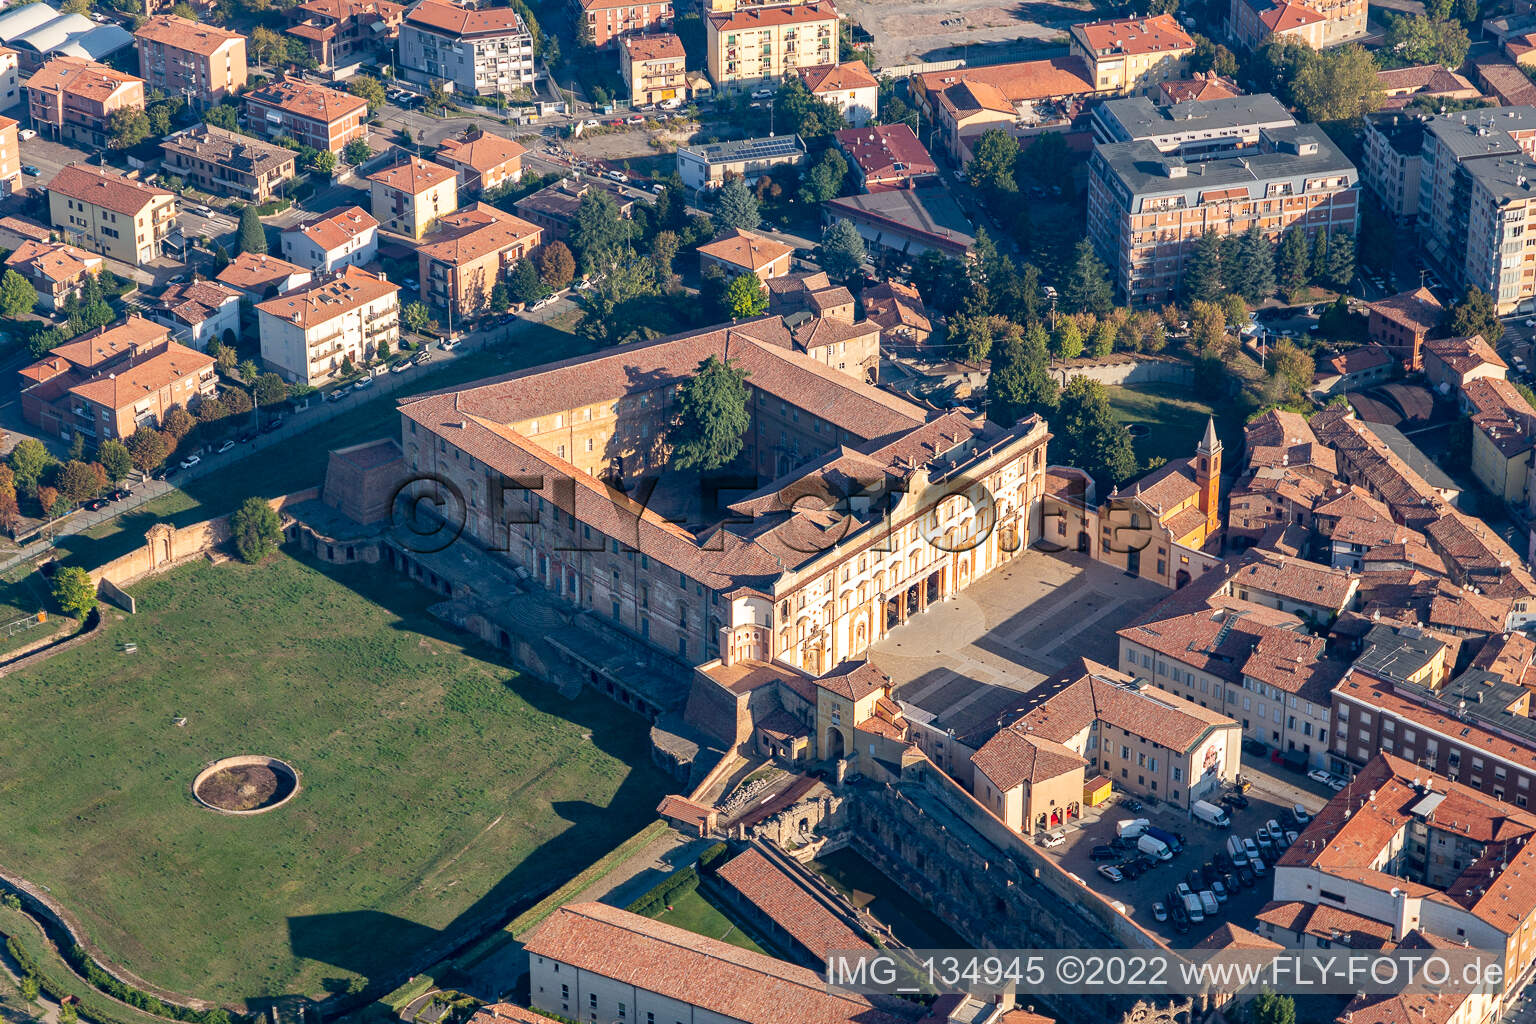 Luftaufnahme von Parco Ducale, Giardini Ducali und Palazzo Ducale in Sassuolo im Bundesland Modena, Italien